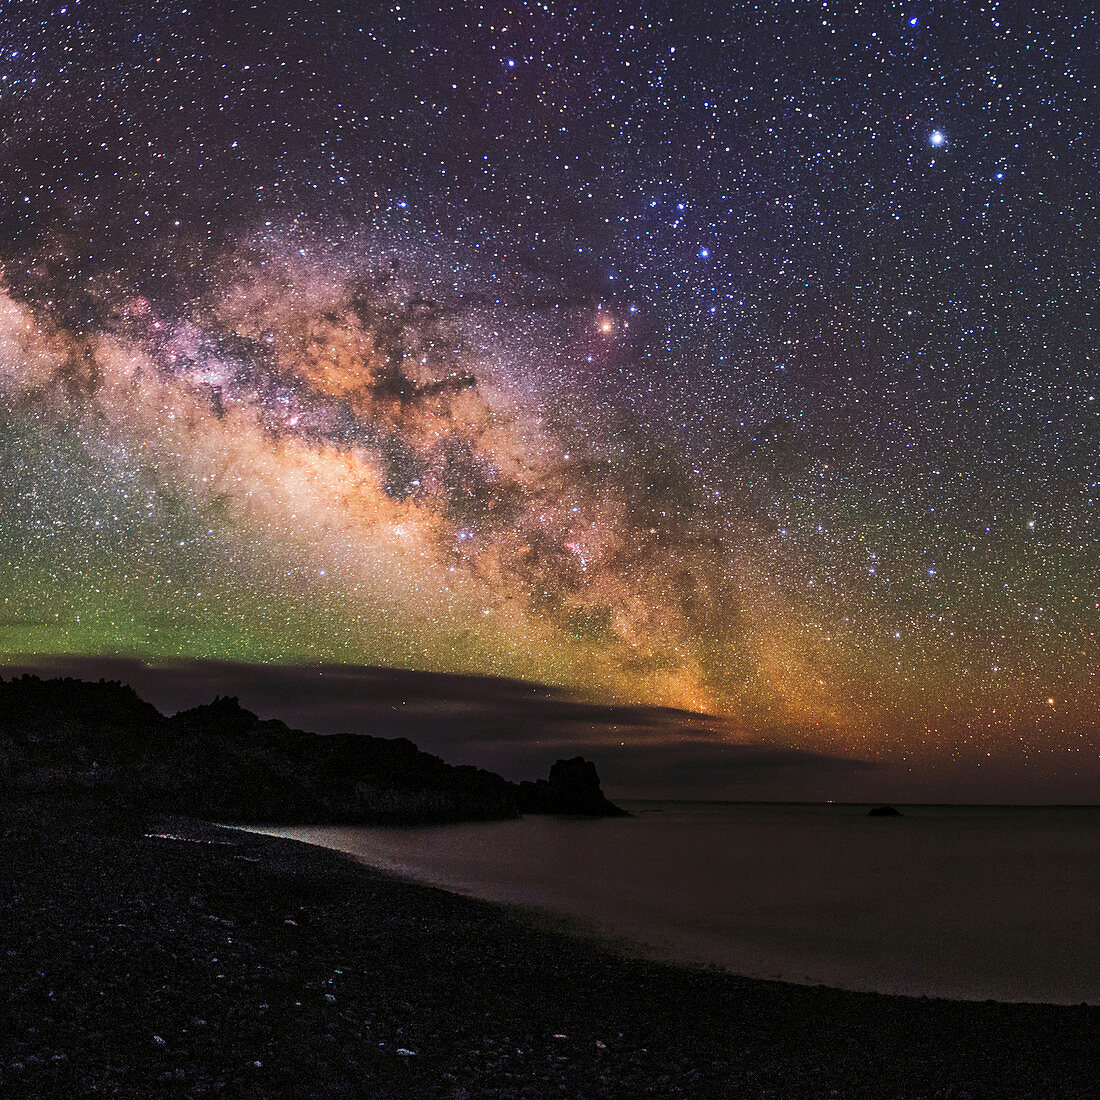 Milky Way over La Palma,Canary Islands